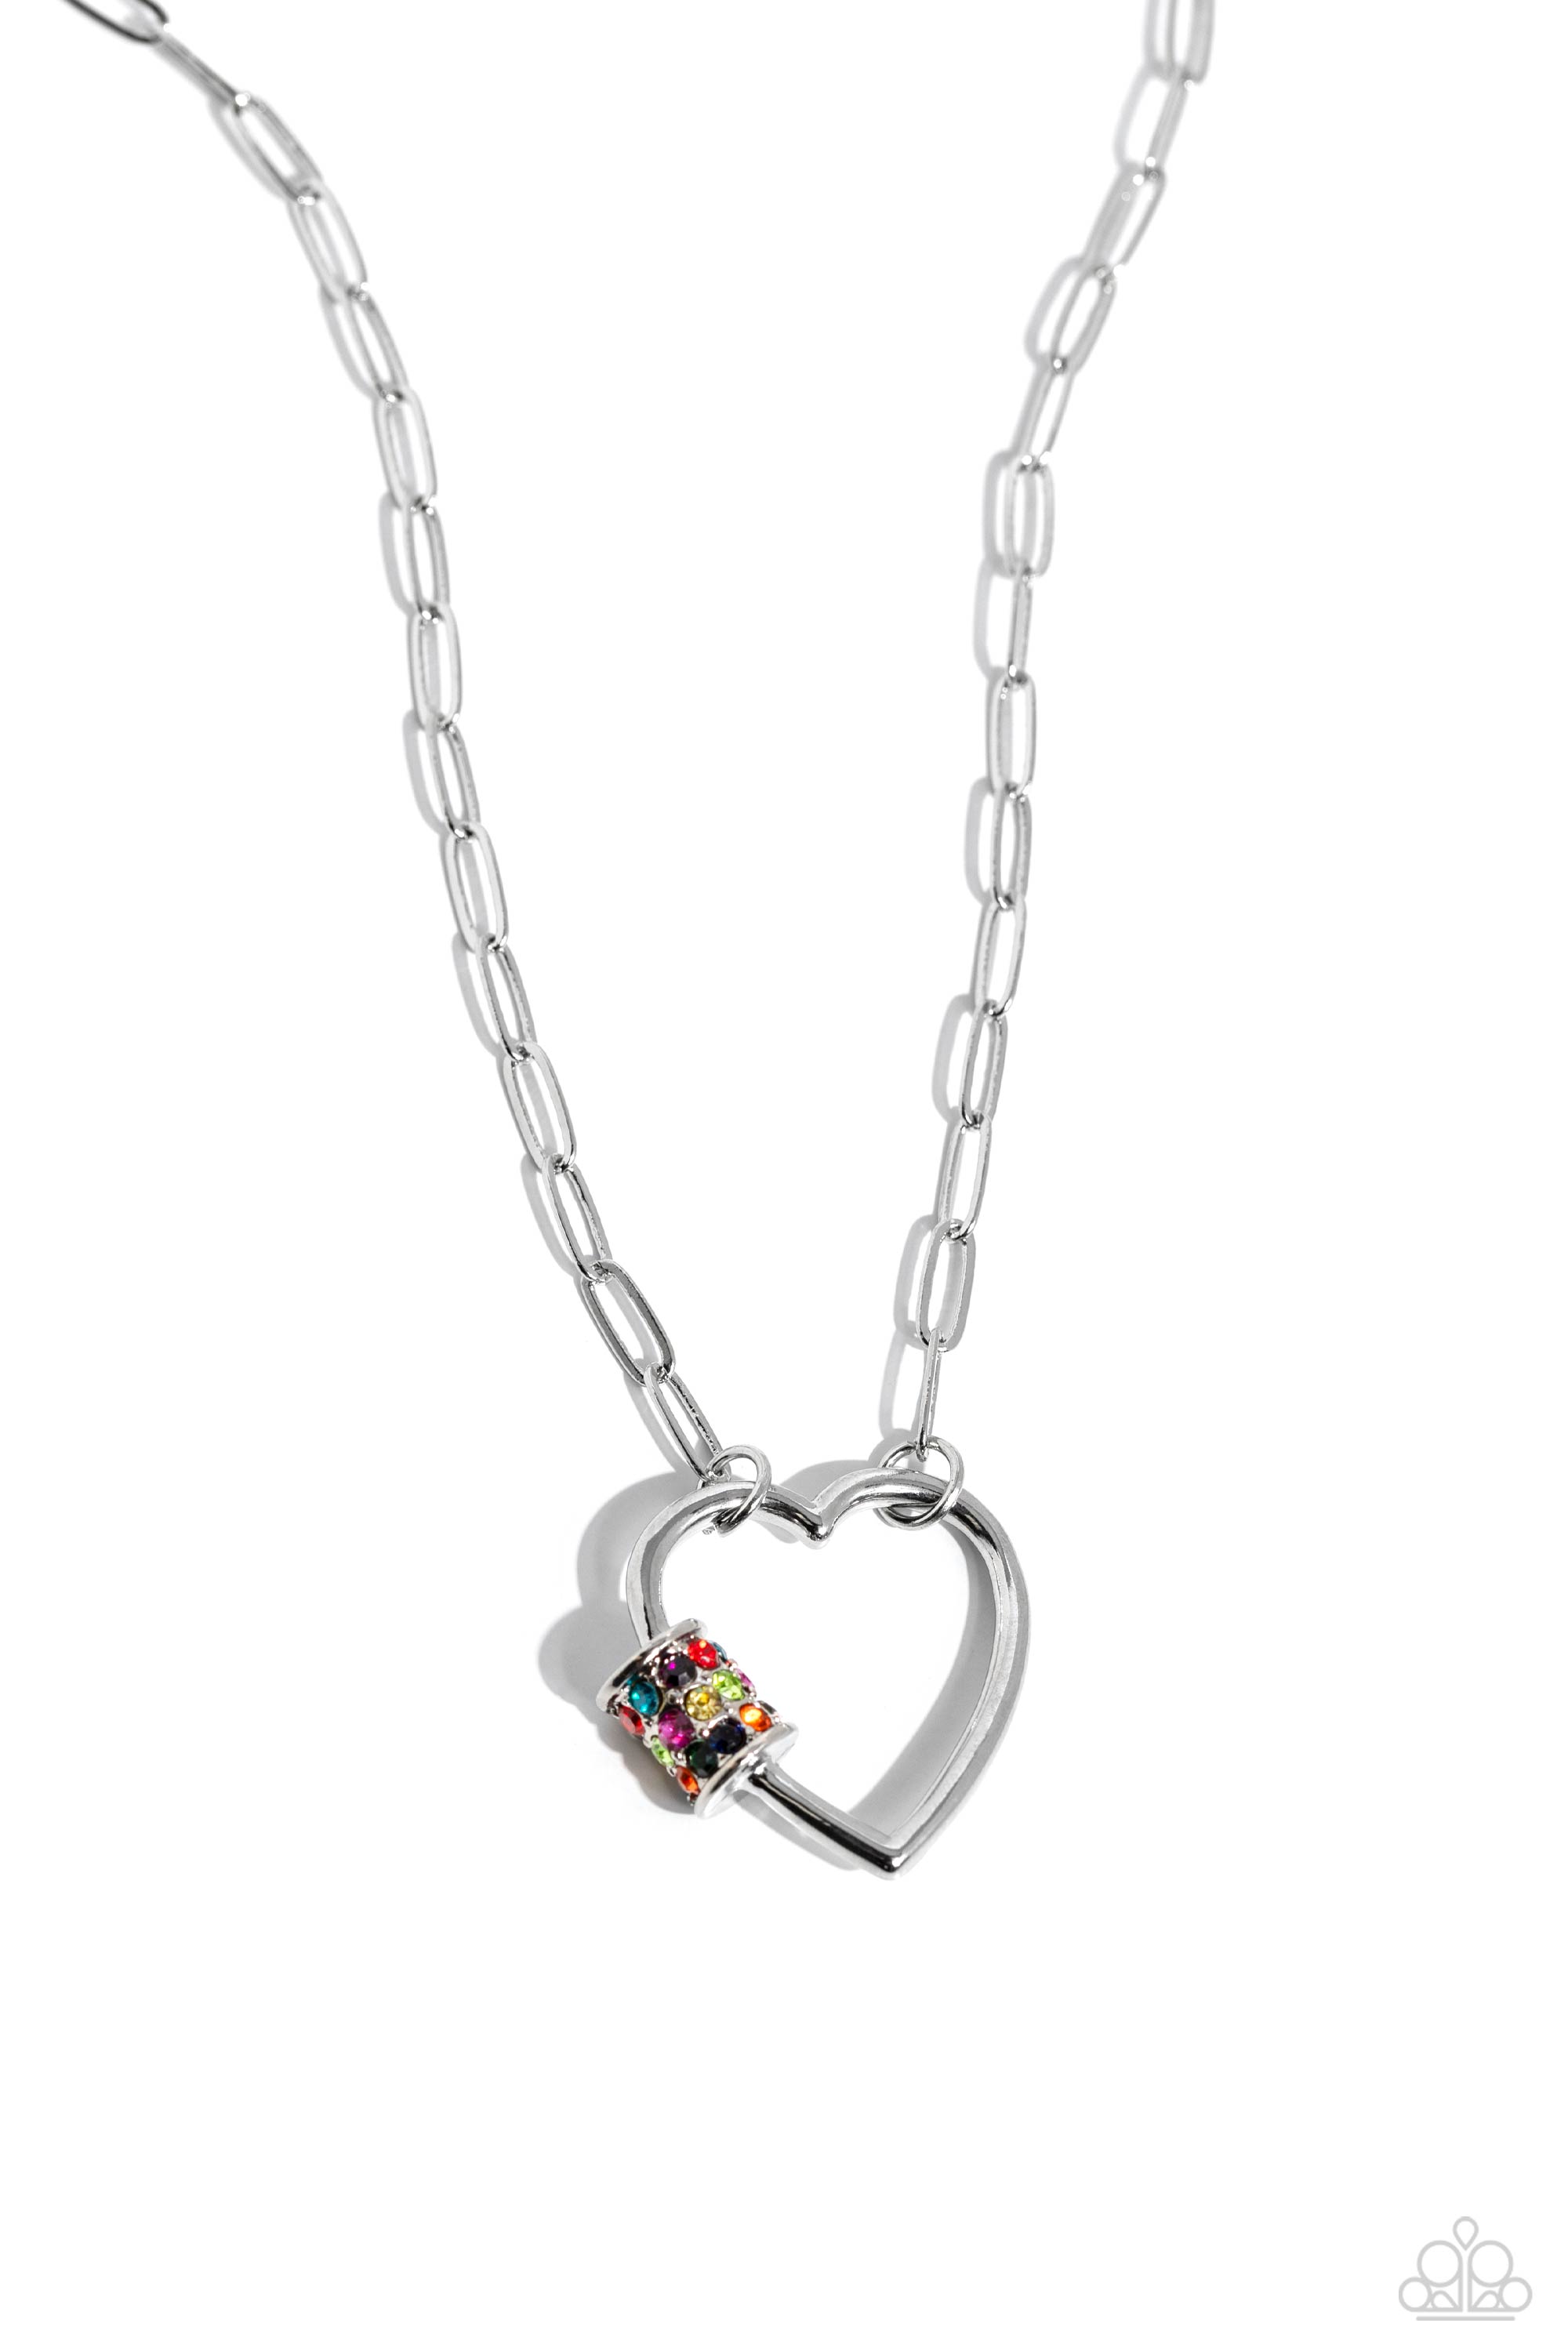 Affectionate Attitude Multi Rhinestone Heart Necklace - Paparazzi Accessories- lightbox - CarasShop.com - $5 Jewelry by Cara Jewels